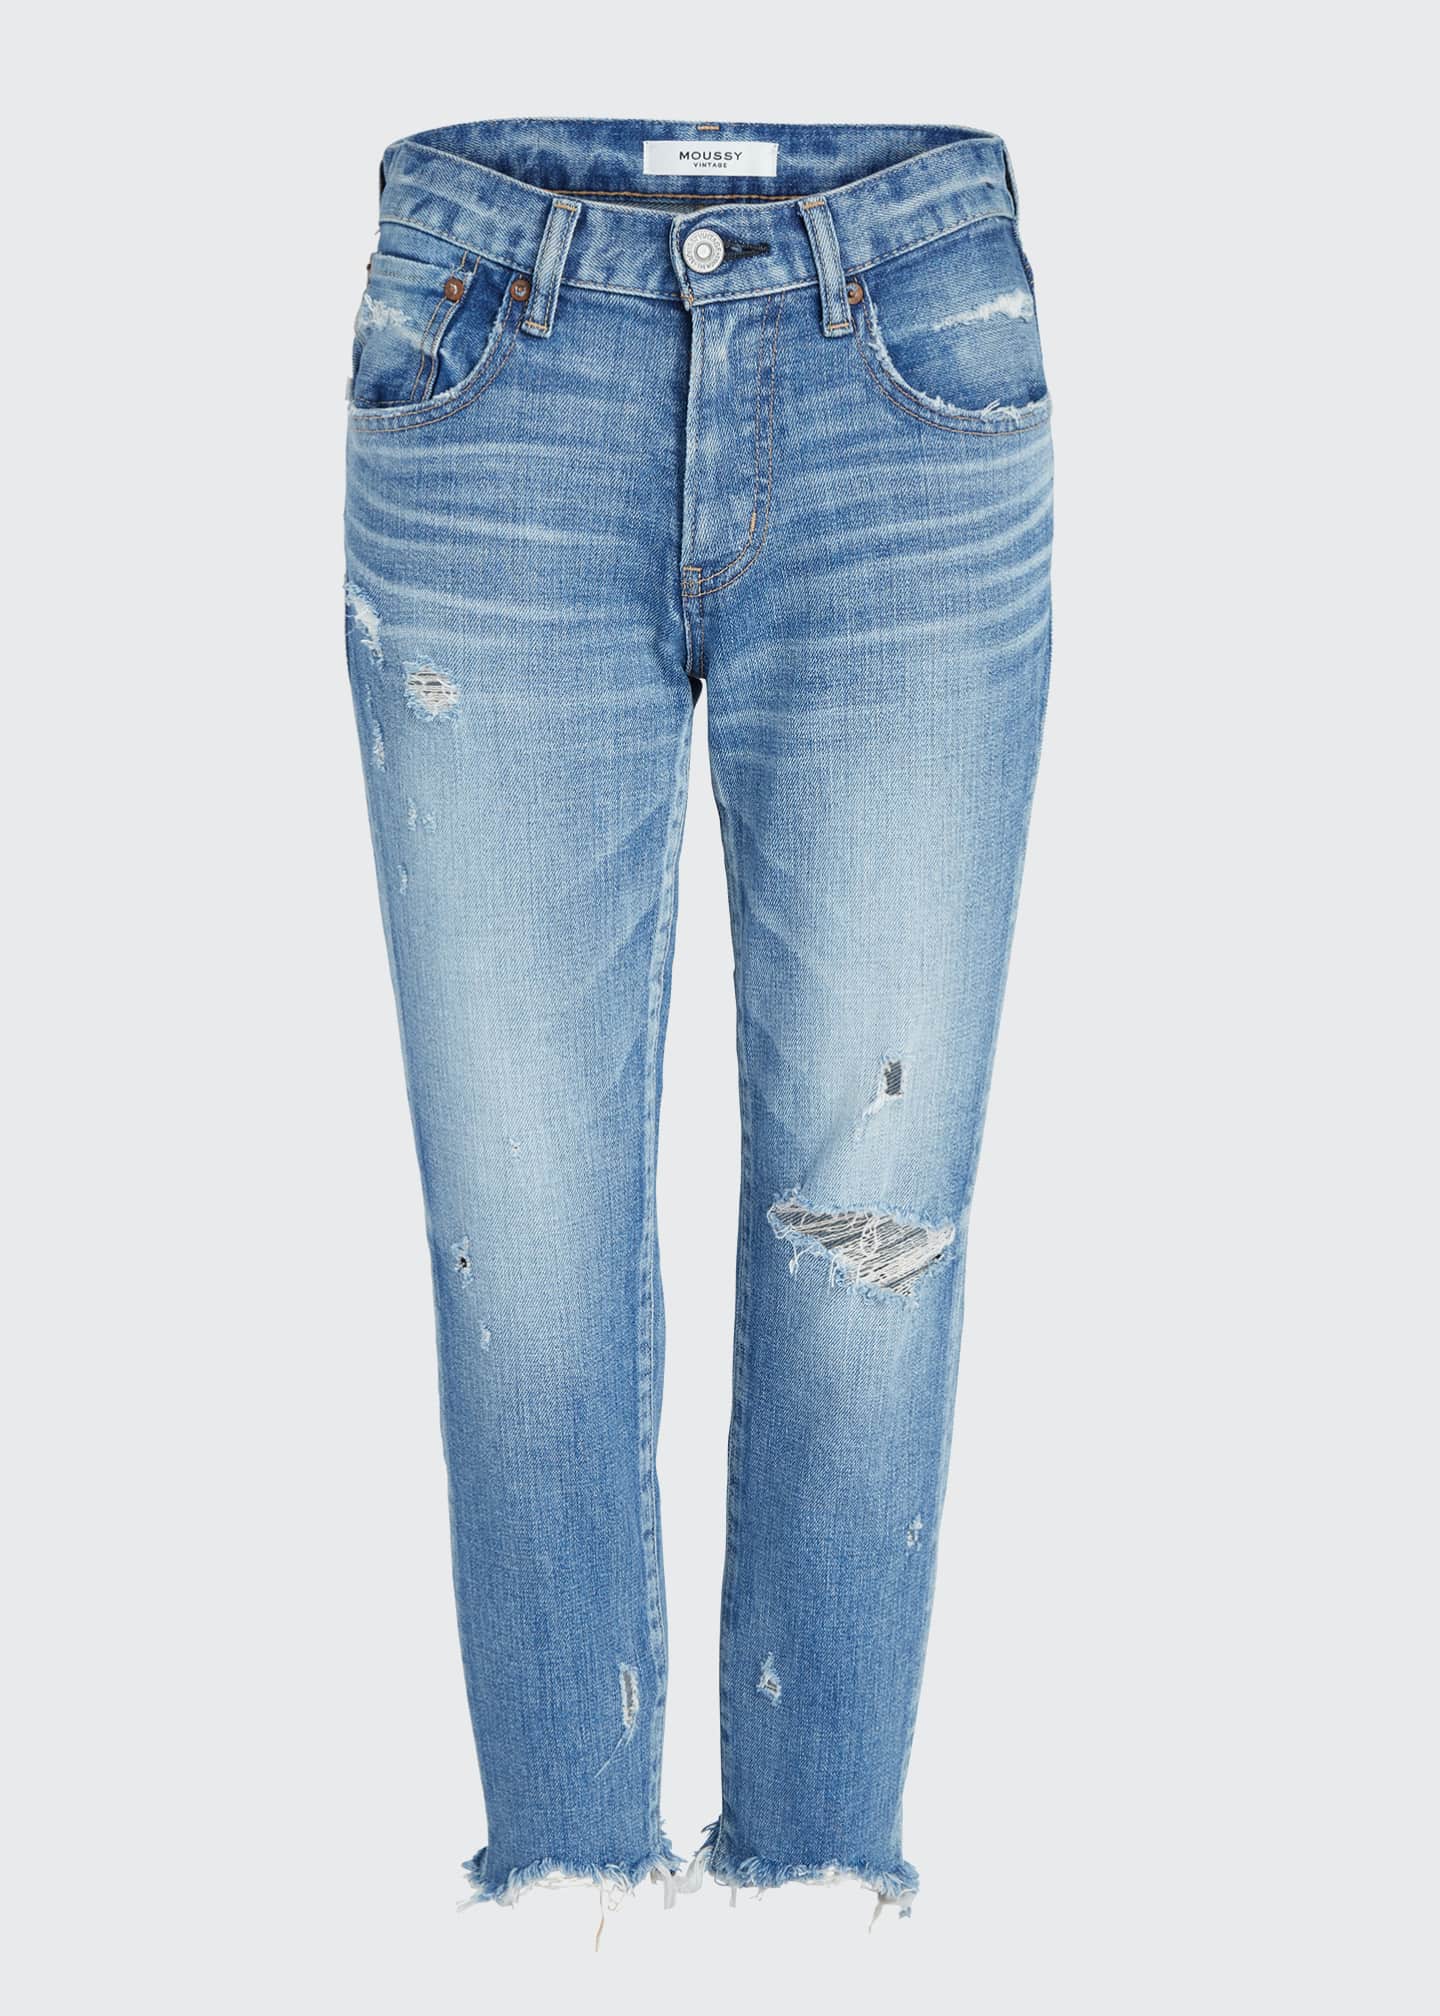 MOUSSY VINTAGE Glendele Cropped Skinny Jeans - Bergdorf Goodman